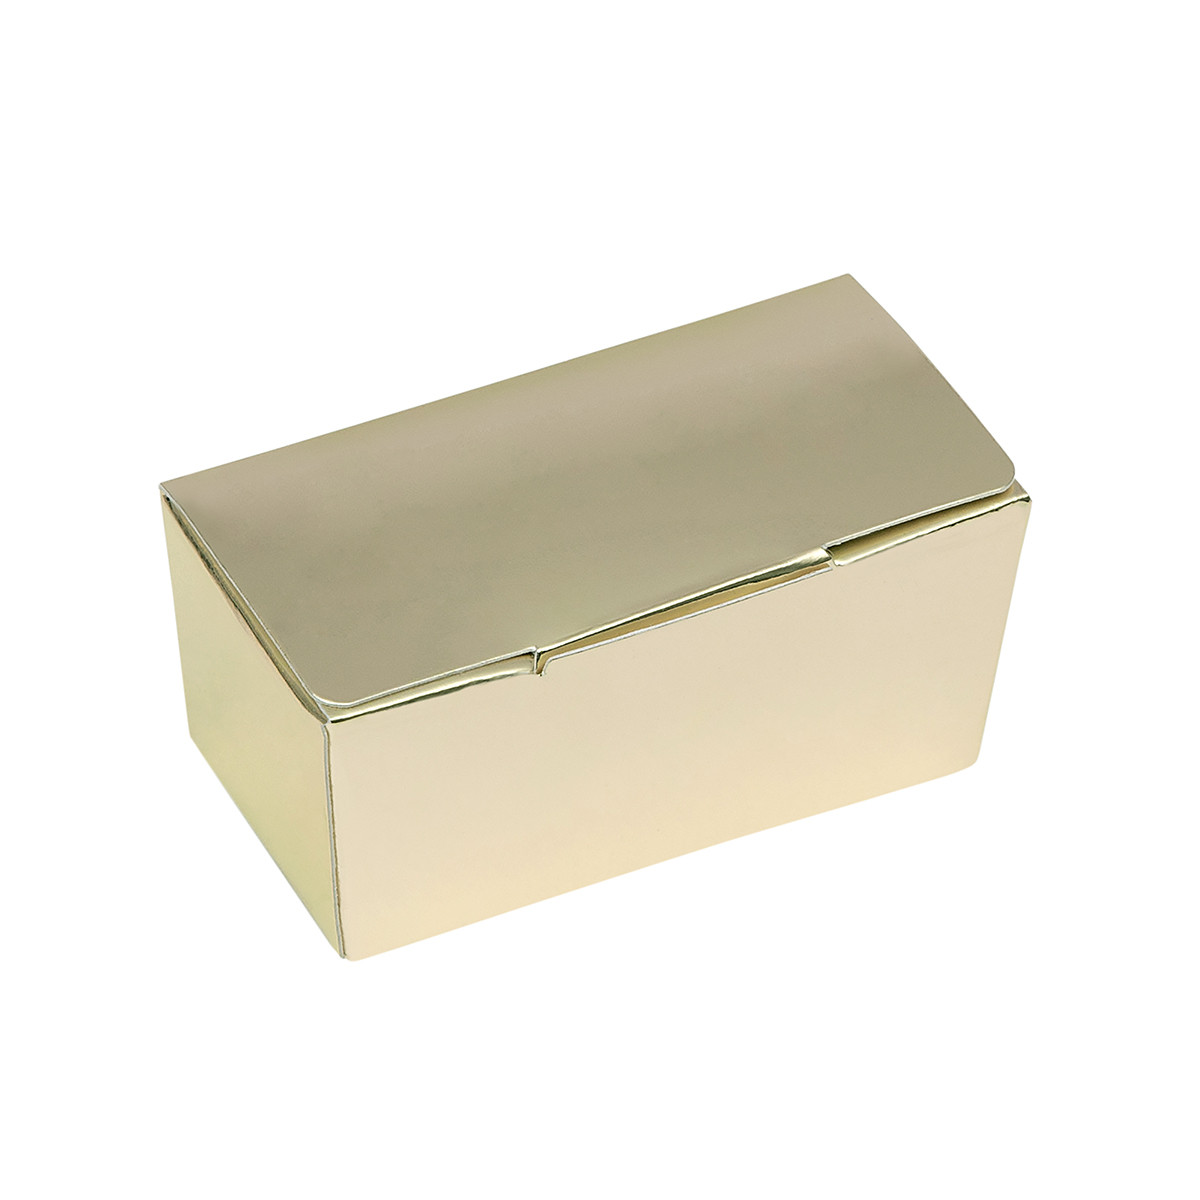 Bonbon box Gold Metallic -2 bonbons- 3 pieces